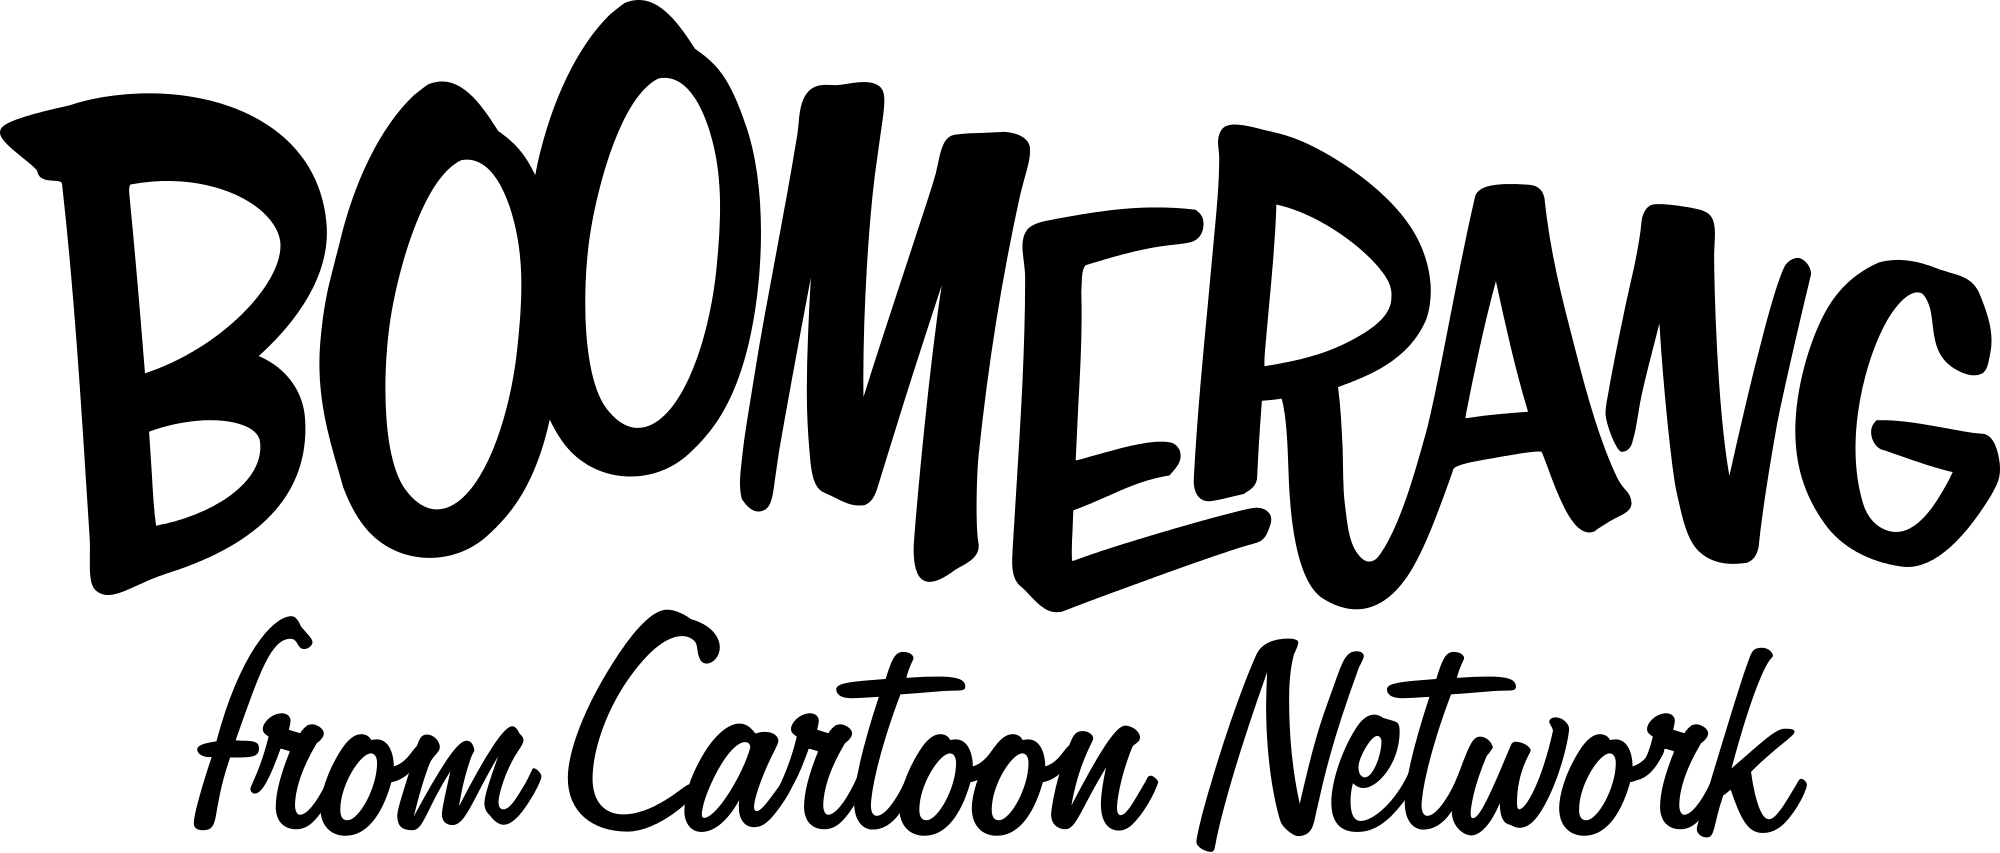 Boomerang From Cartoon Network Logo - Boomerang from Cartoon Network logo.svg